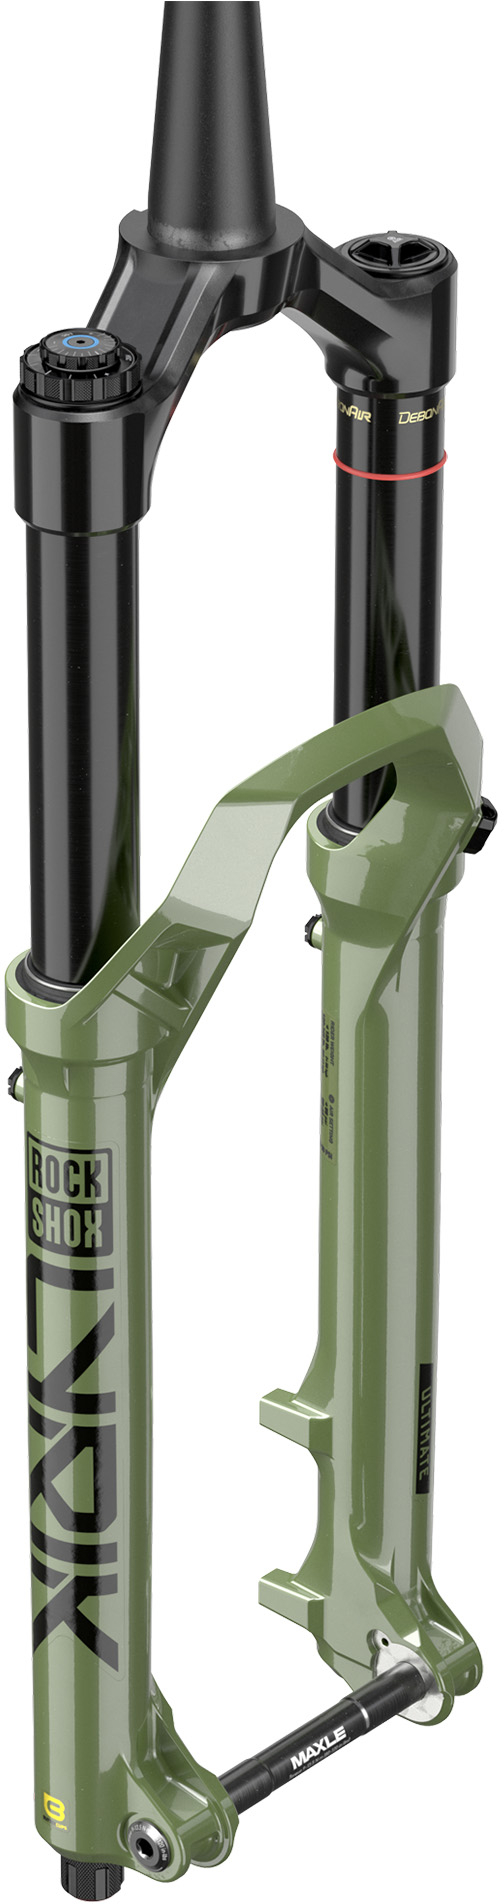 ROCKSHOX LYRIK ULTIMATE 27.5 150mm